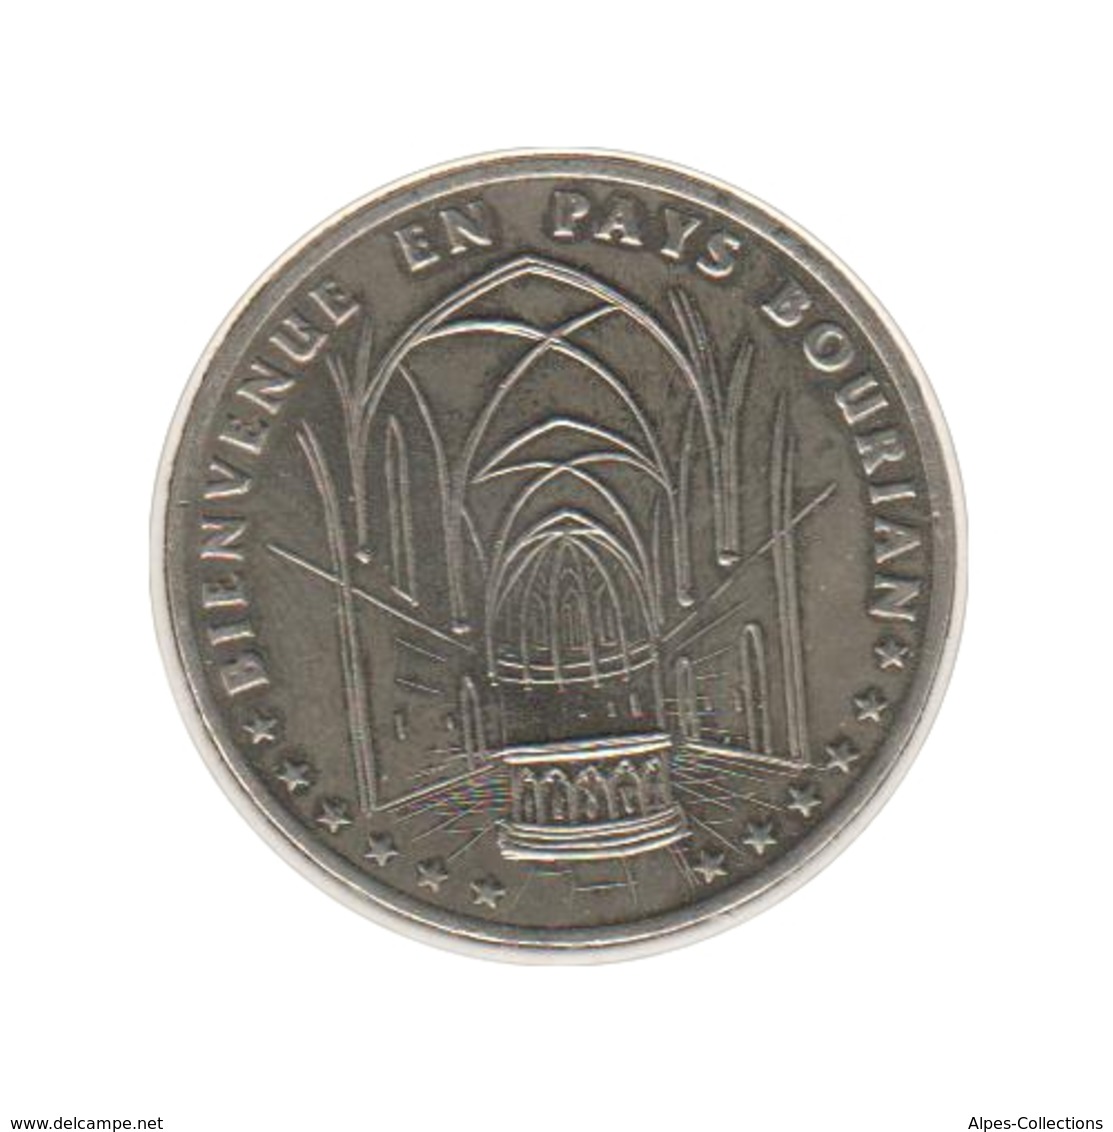 GOURDON - EC0030.1 - 3 ECU DES VILLES - Réf: T63 - 1995 - Euros De Las Ciudades